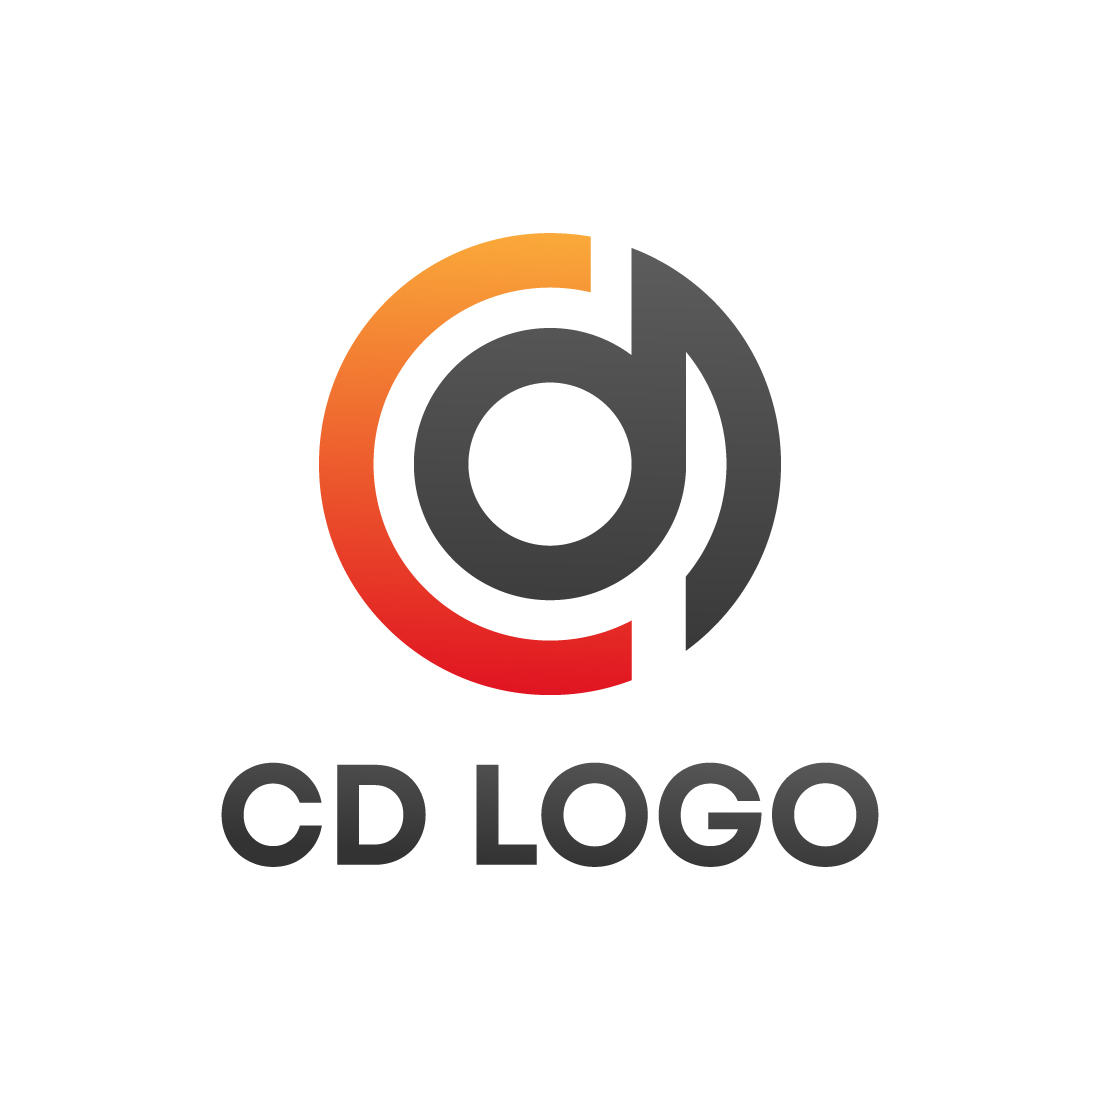 CD LOGO DESIGN cover image.